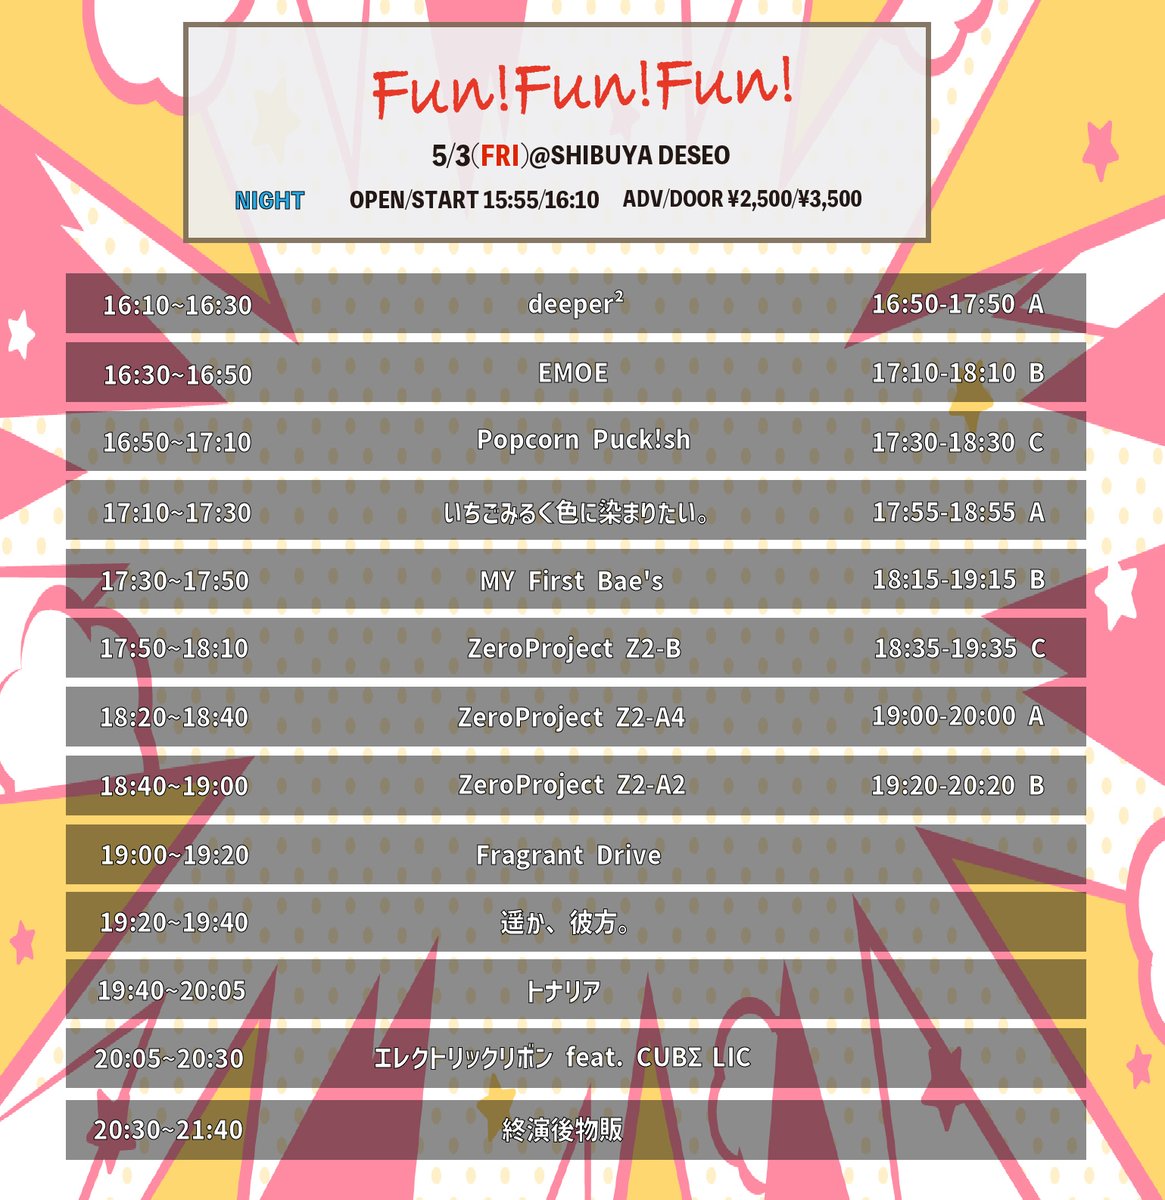 ✨TT解禁✨

『『Fun!Fun!Fun!』 NIGHT』

🗓5/3(金)
📍SHIBUYA DESEO
⏰OPEN 15:55
⏰START  16:10
🎫ticketvillage.jp/events/12854

出演
Z2-A2
Z2-A4

Z2-A2
🎤18:40-19:00
📷19:20-20:20

Z2-A4
🎤18:20-18:40
📷19:00-20:00

#Z2A_0503